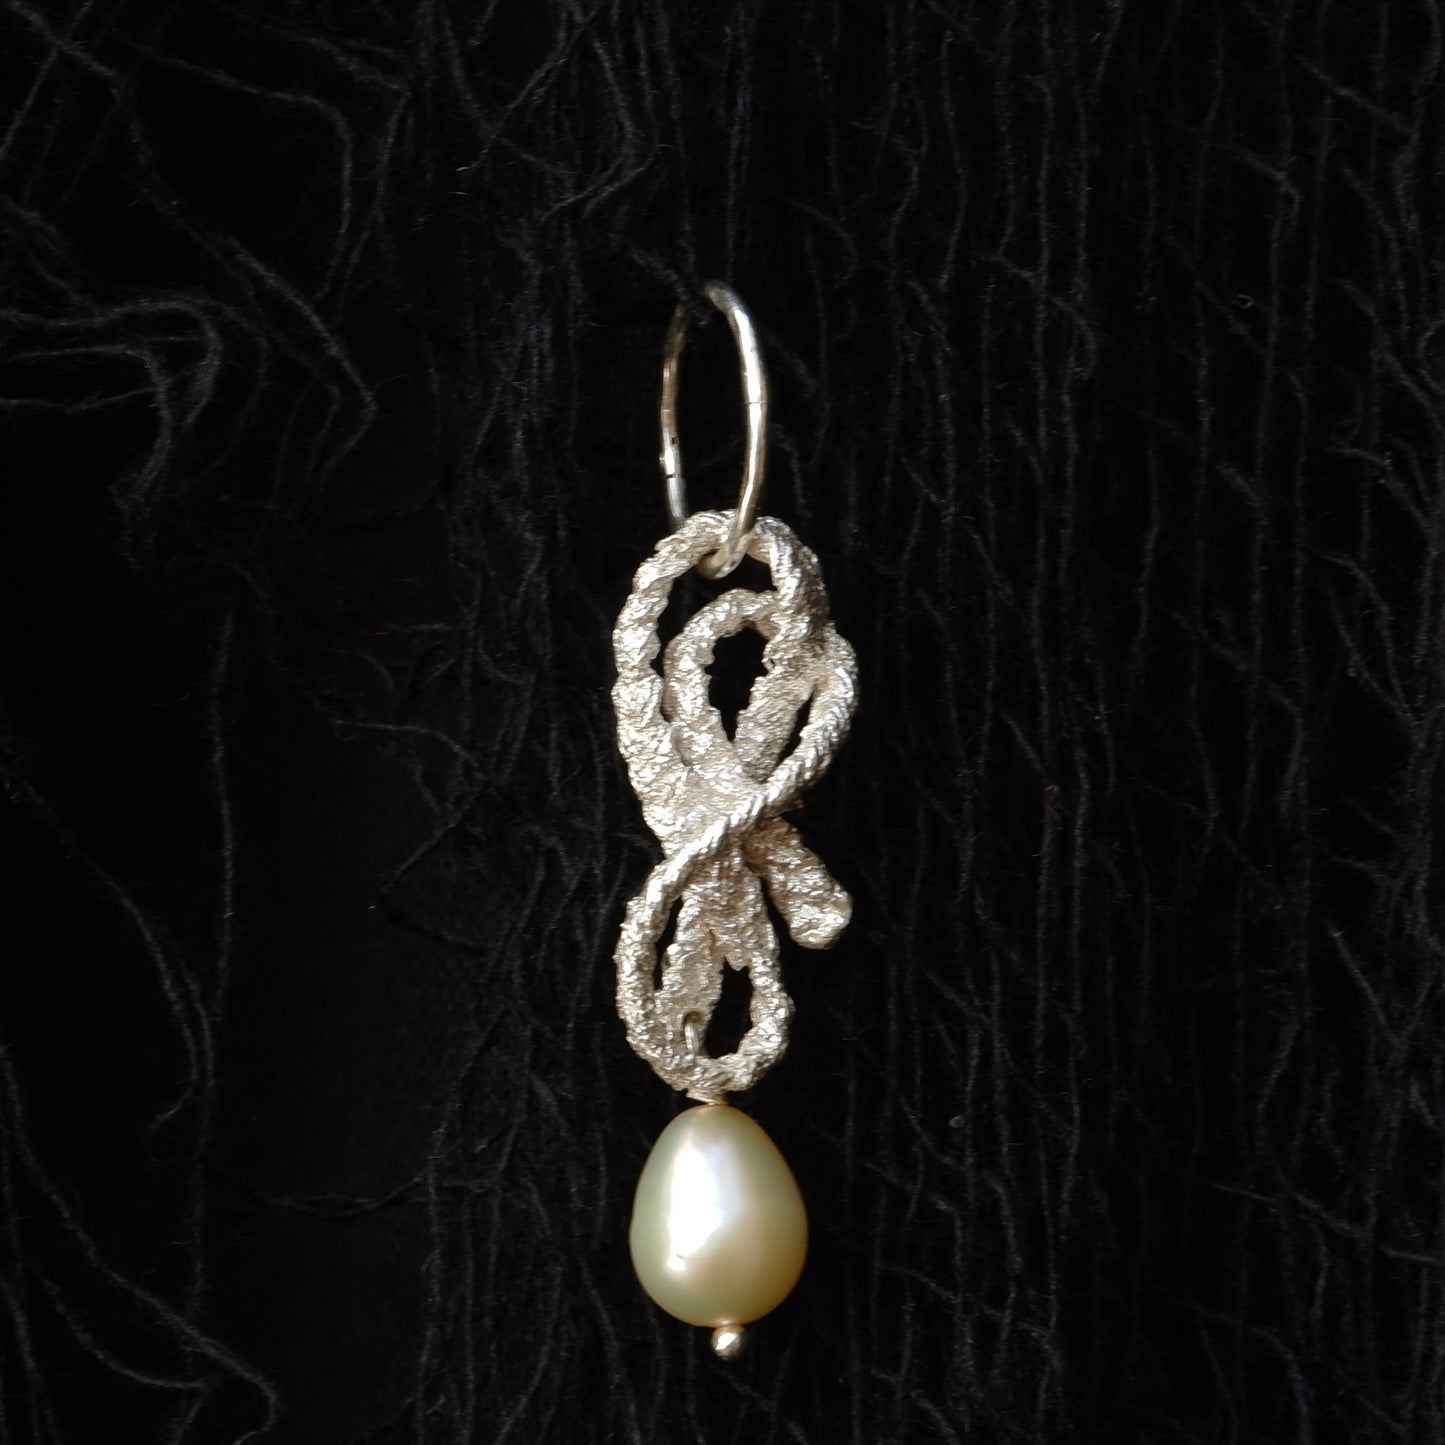 Buntline earring with pearl drop (single)